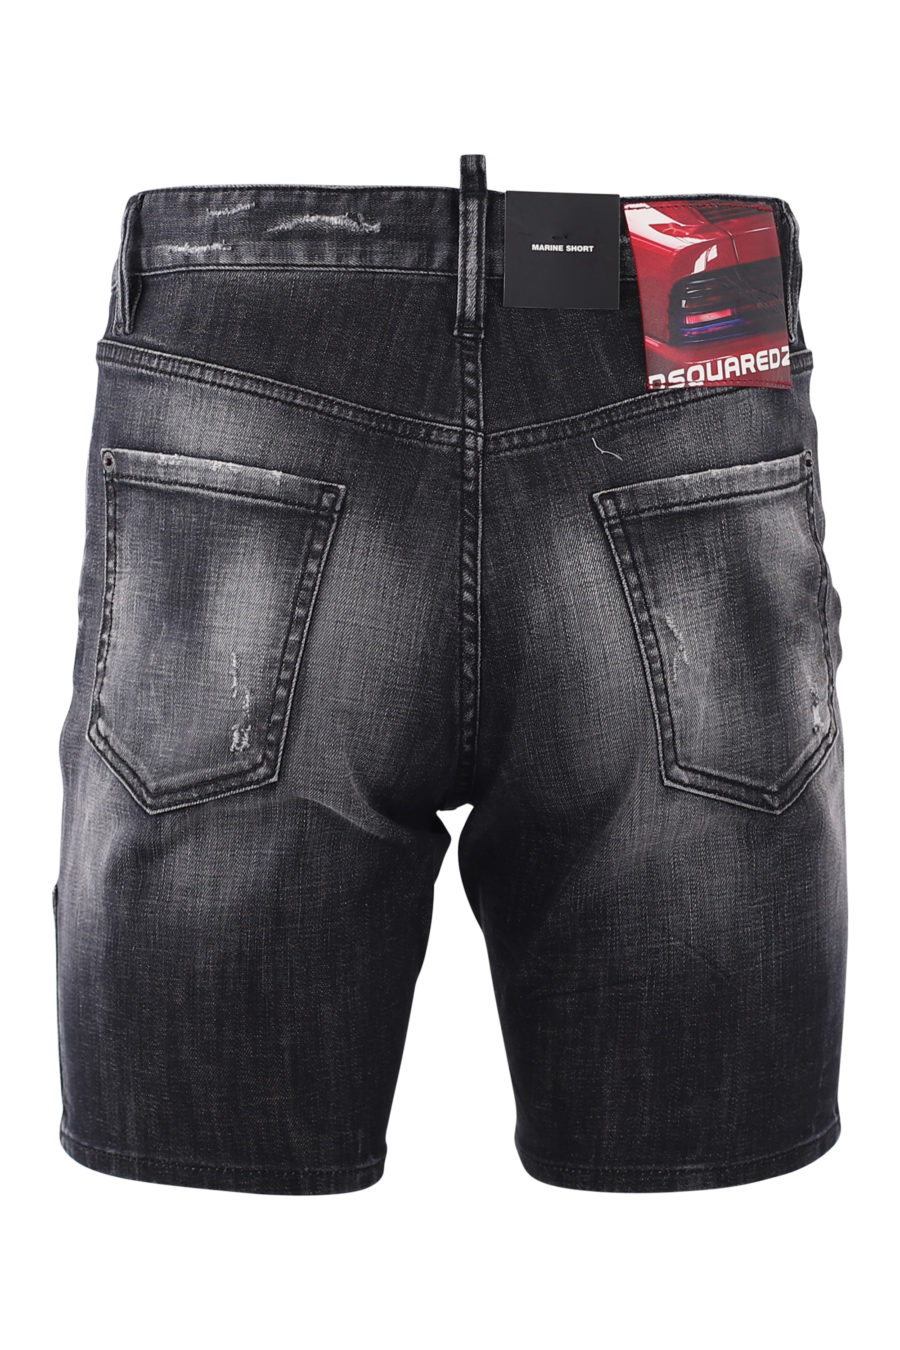 Pantalón corto negro "marine short" - IMG 6919